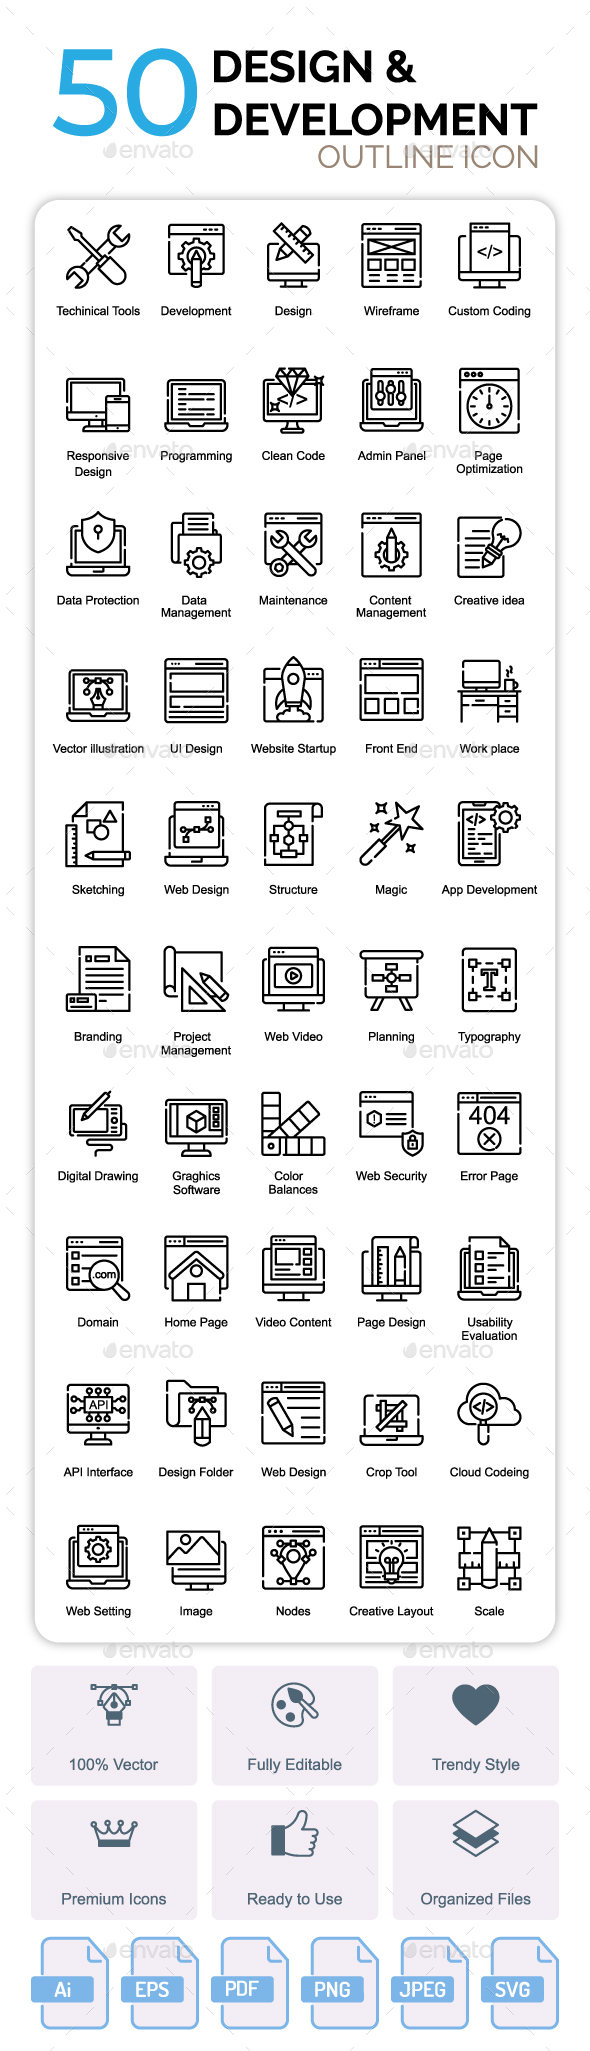 Design and Development Outline Icons Set